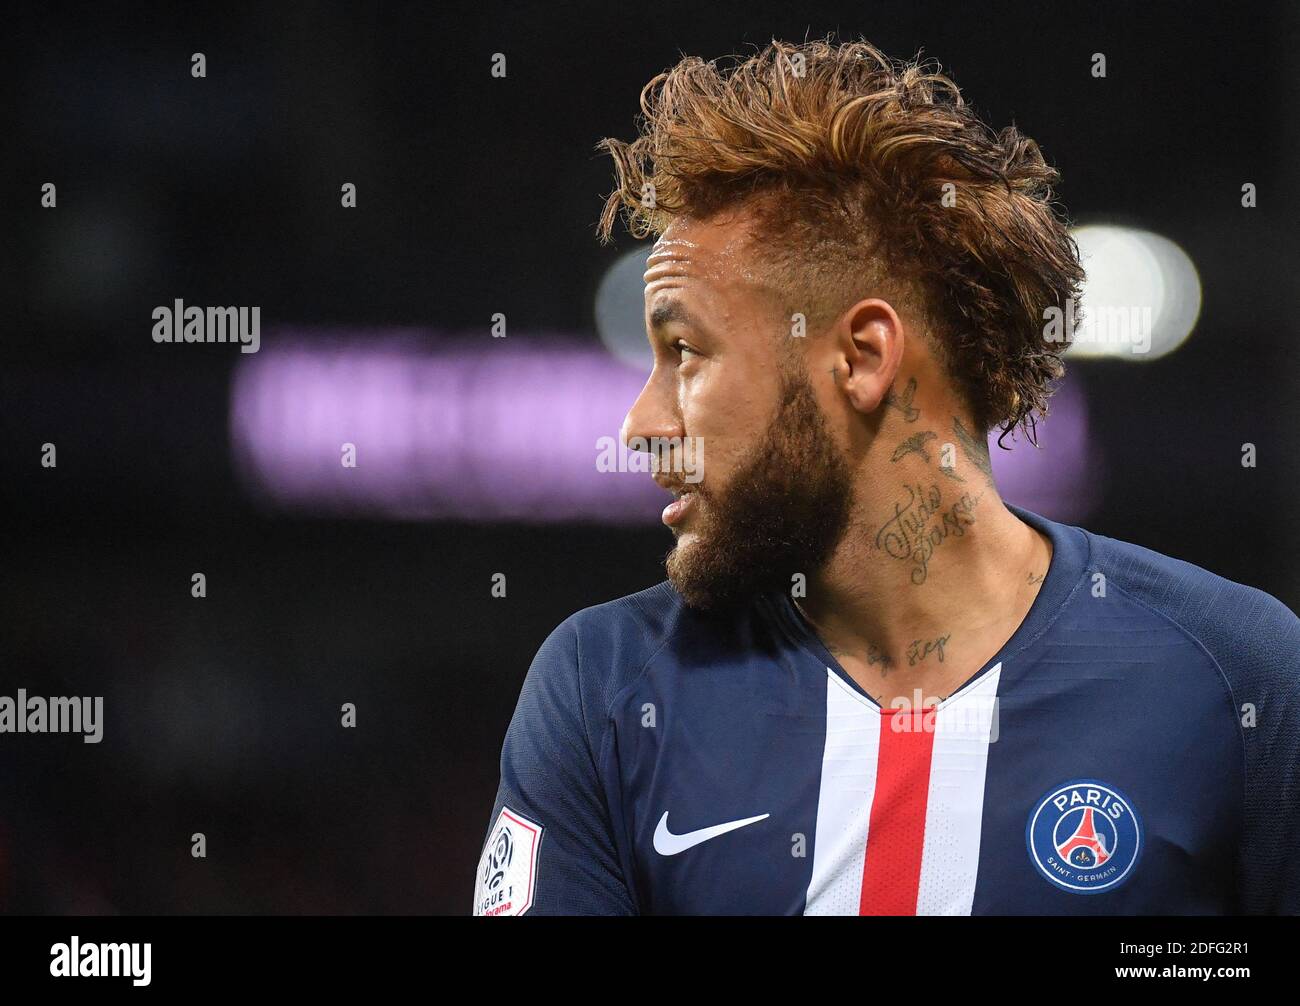 File photo dated November 22, 2019 of Paris Saint-Germain's Brazilian  forward Neymar in action during the Ligue 1 Paris Saint-Germain (PSG) v  Lille (LOSC) football match at the Parc des Princes stadium